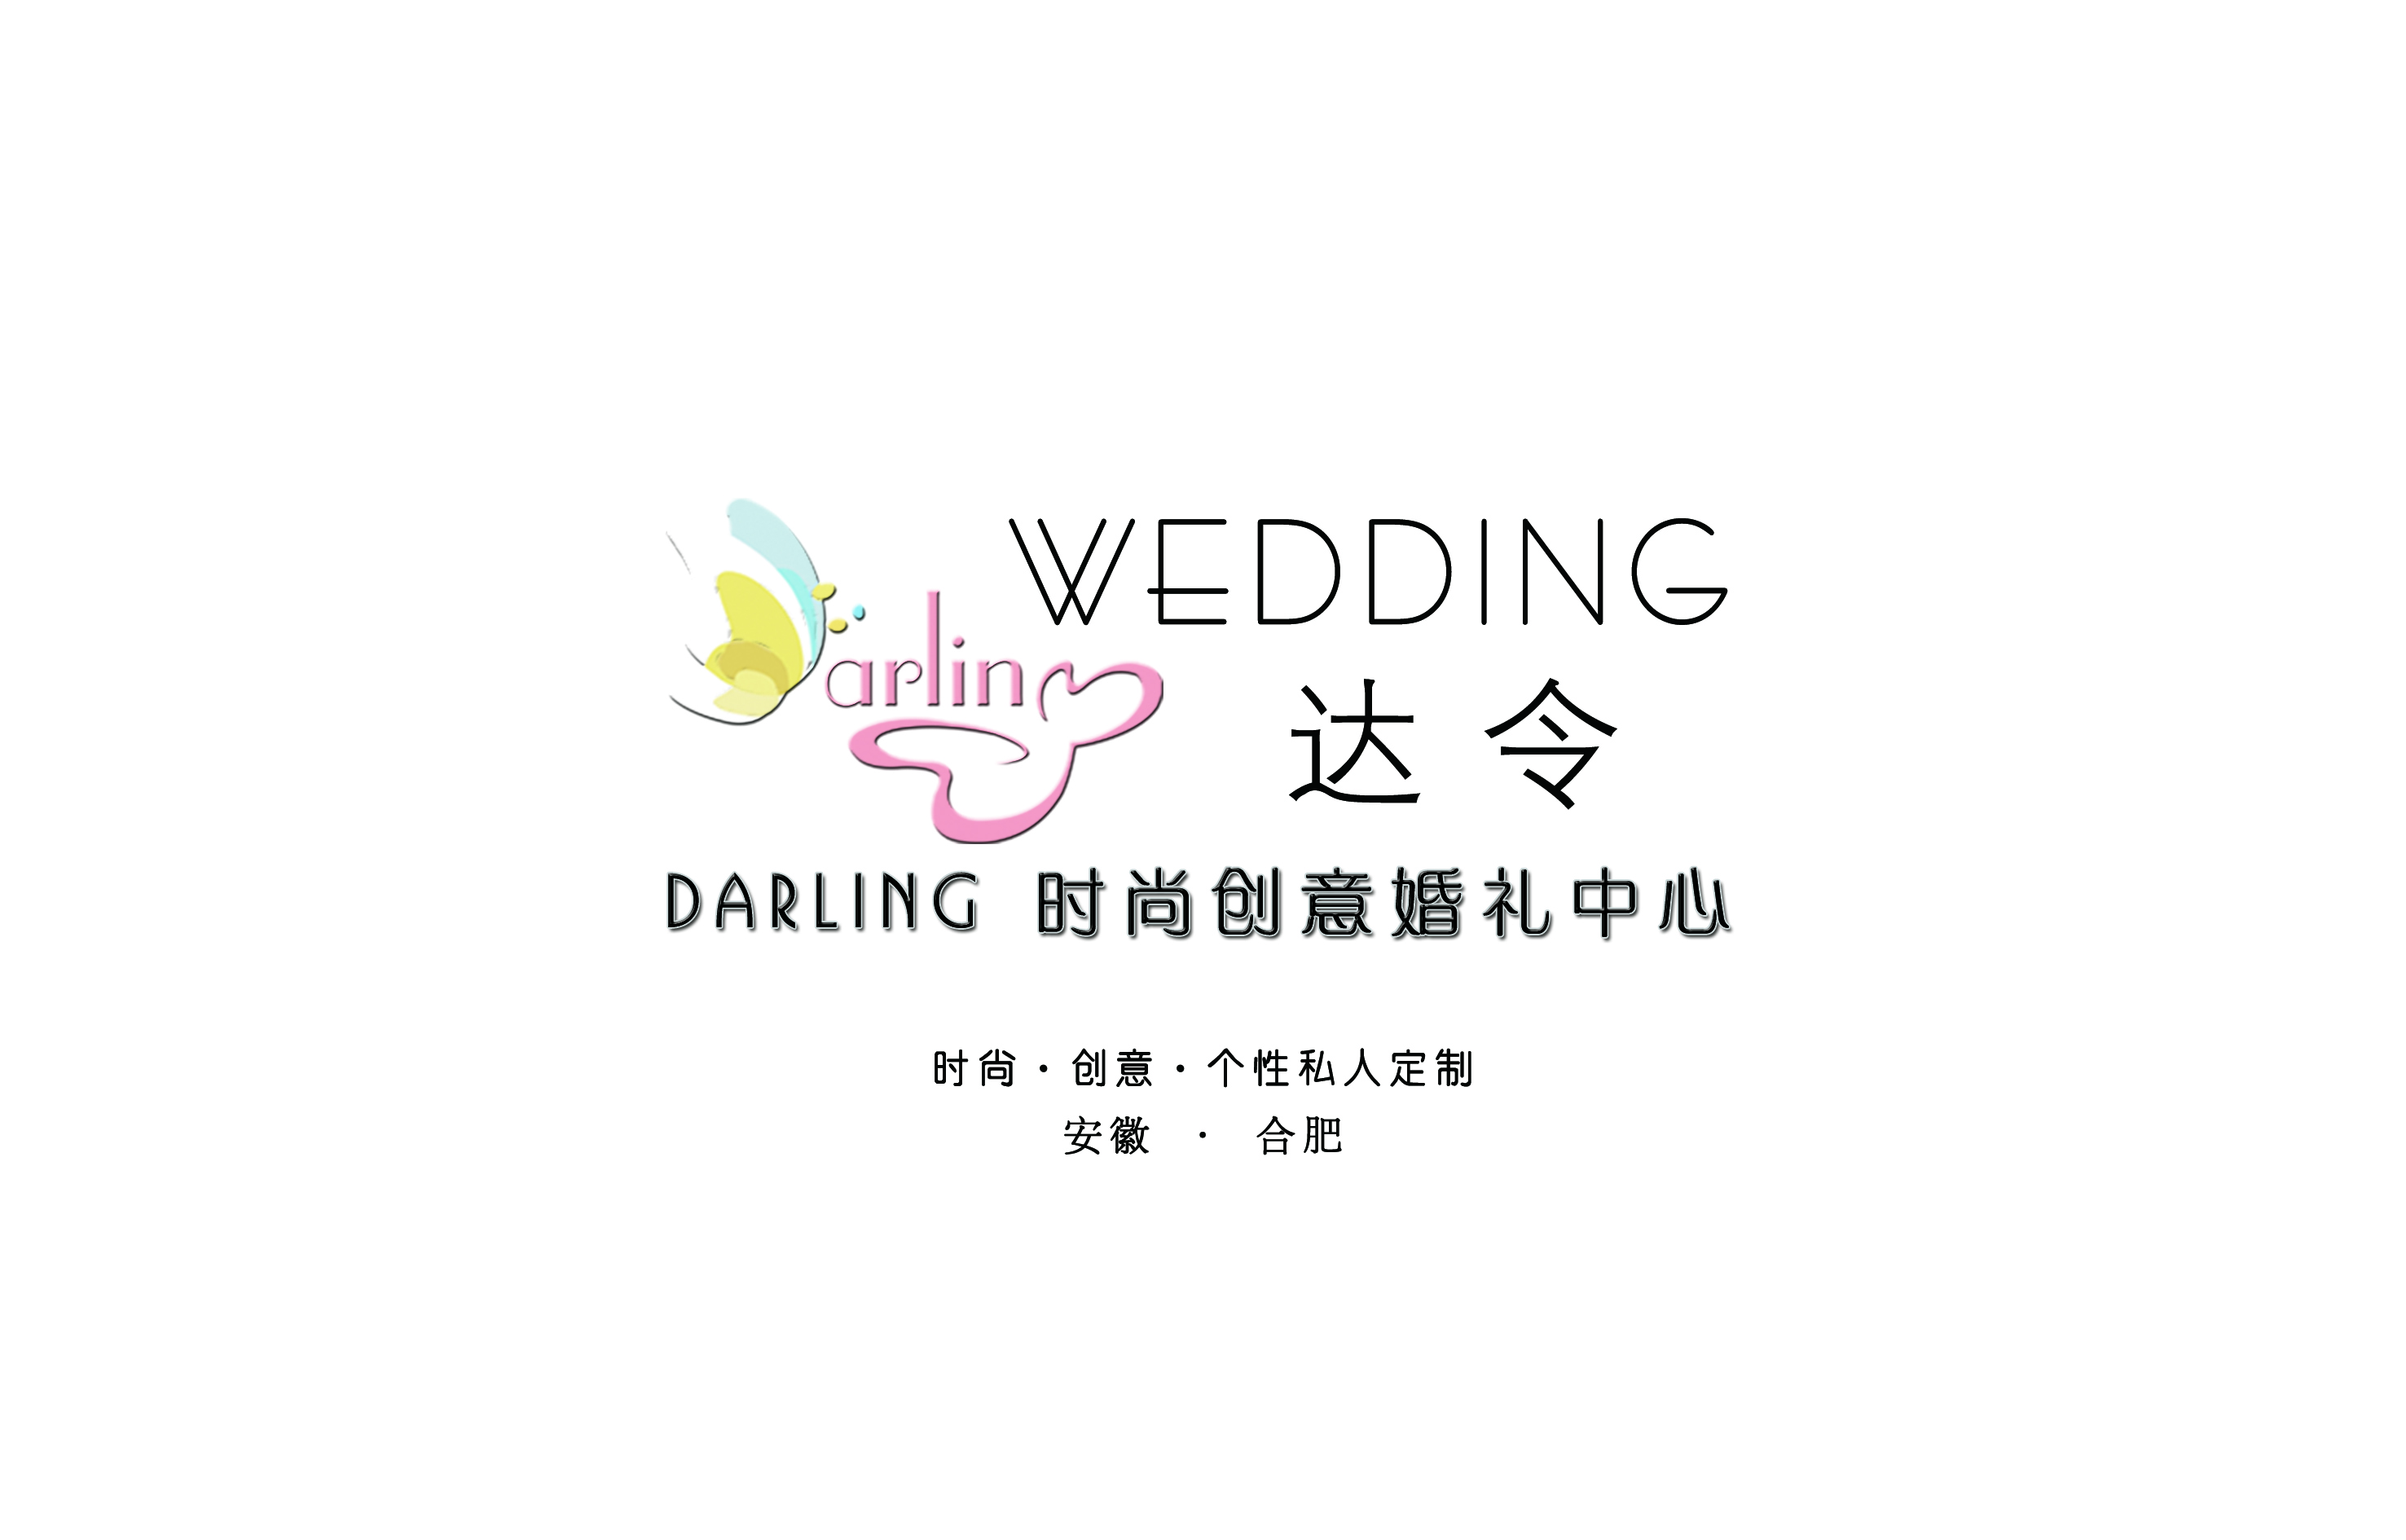 Darling-婚礼定制